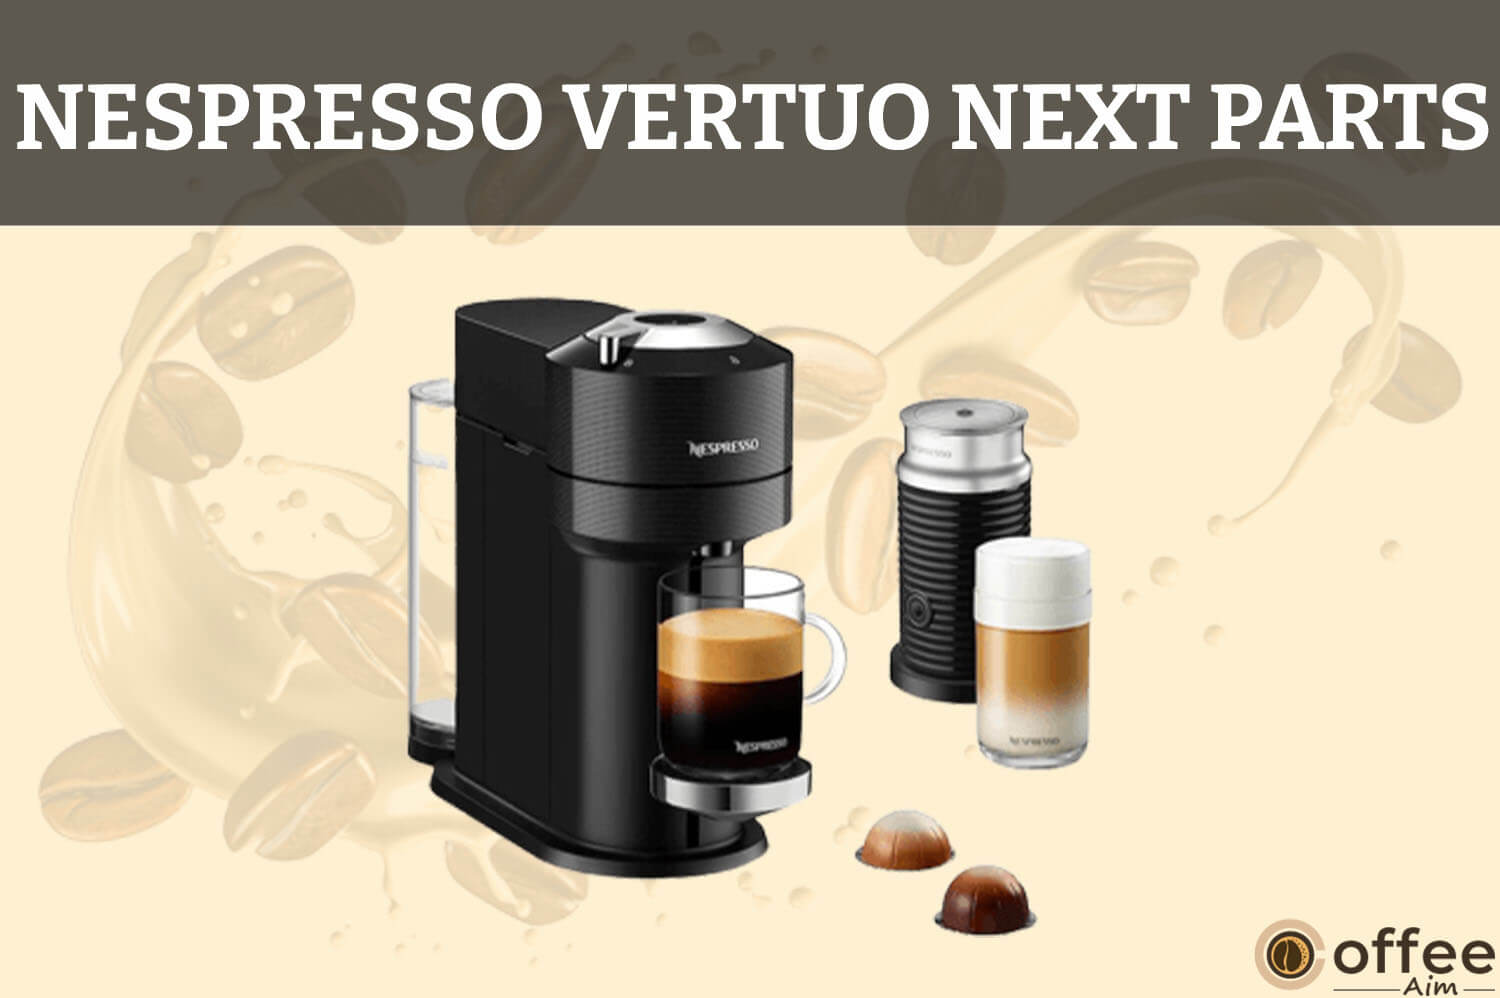 Nespresso Vertuo Next Parts